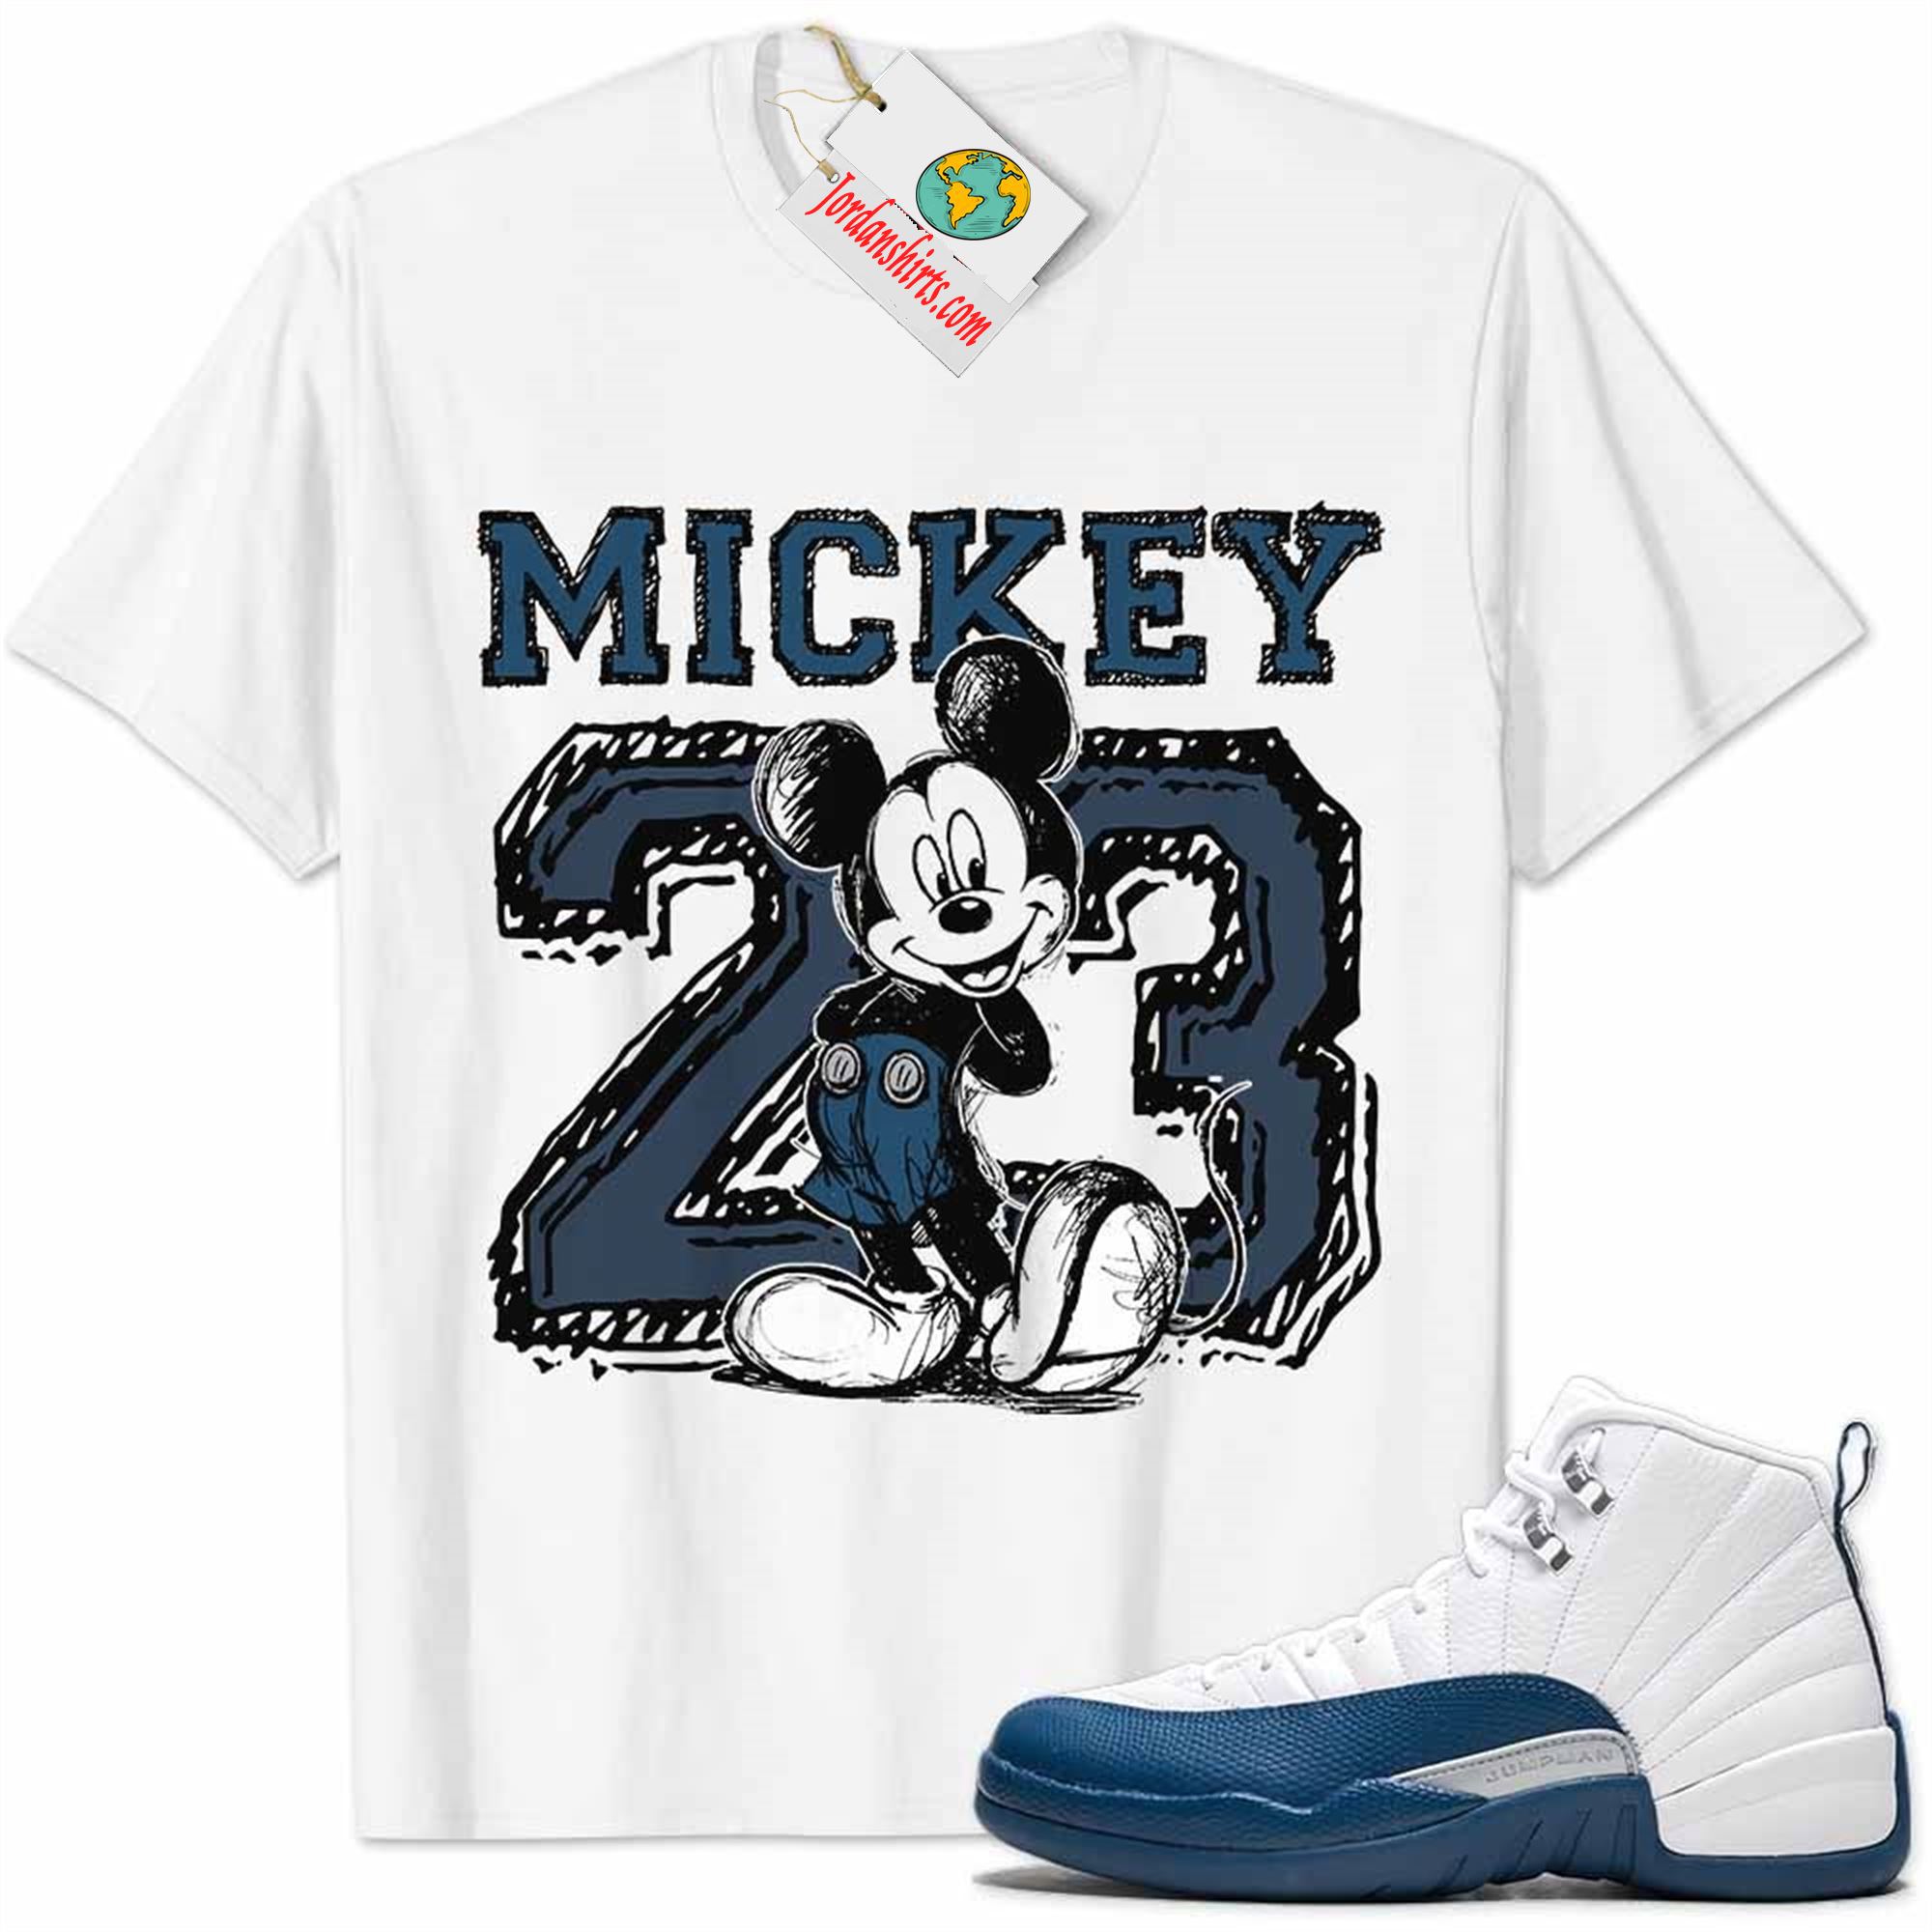 Jordan 12 Shirt, French Blue 12s Shirt Mickey 23 Michael Jordan Number Draw White Full Size Up To 5xl